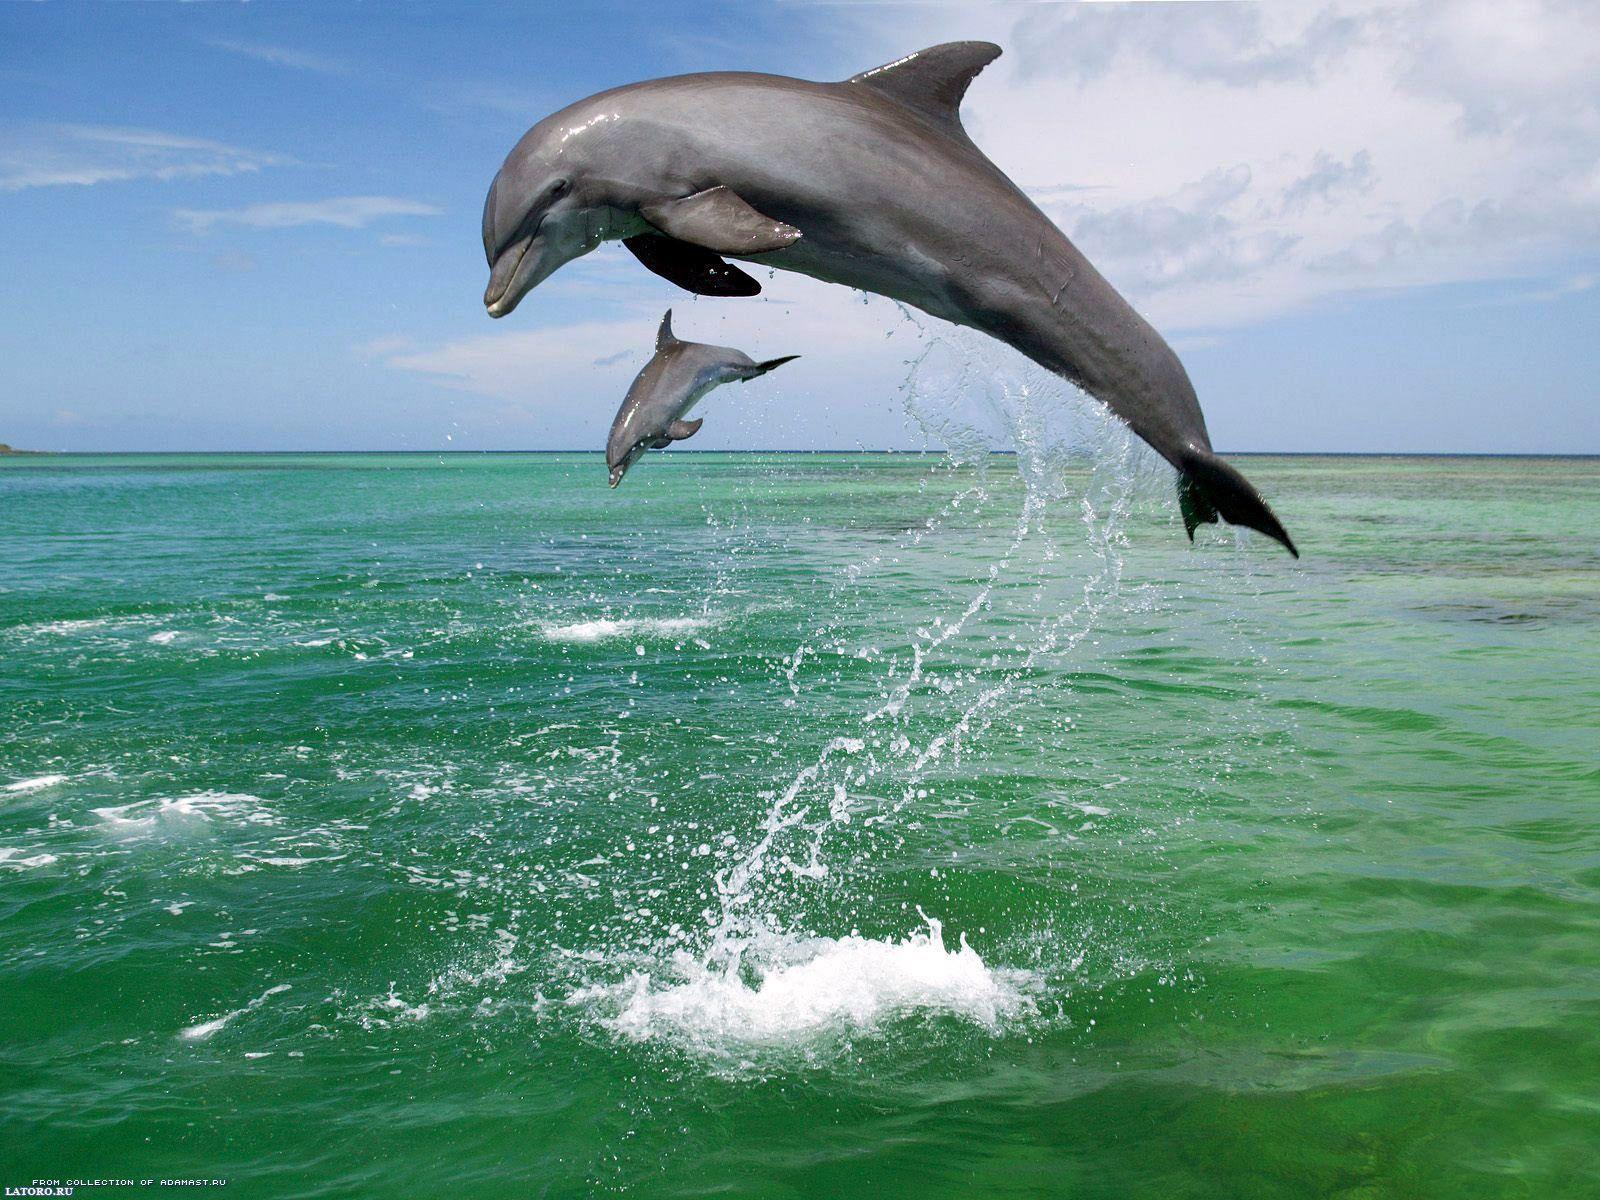 Dolphin Desktop Wallpaper FREE on Latoro.com